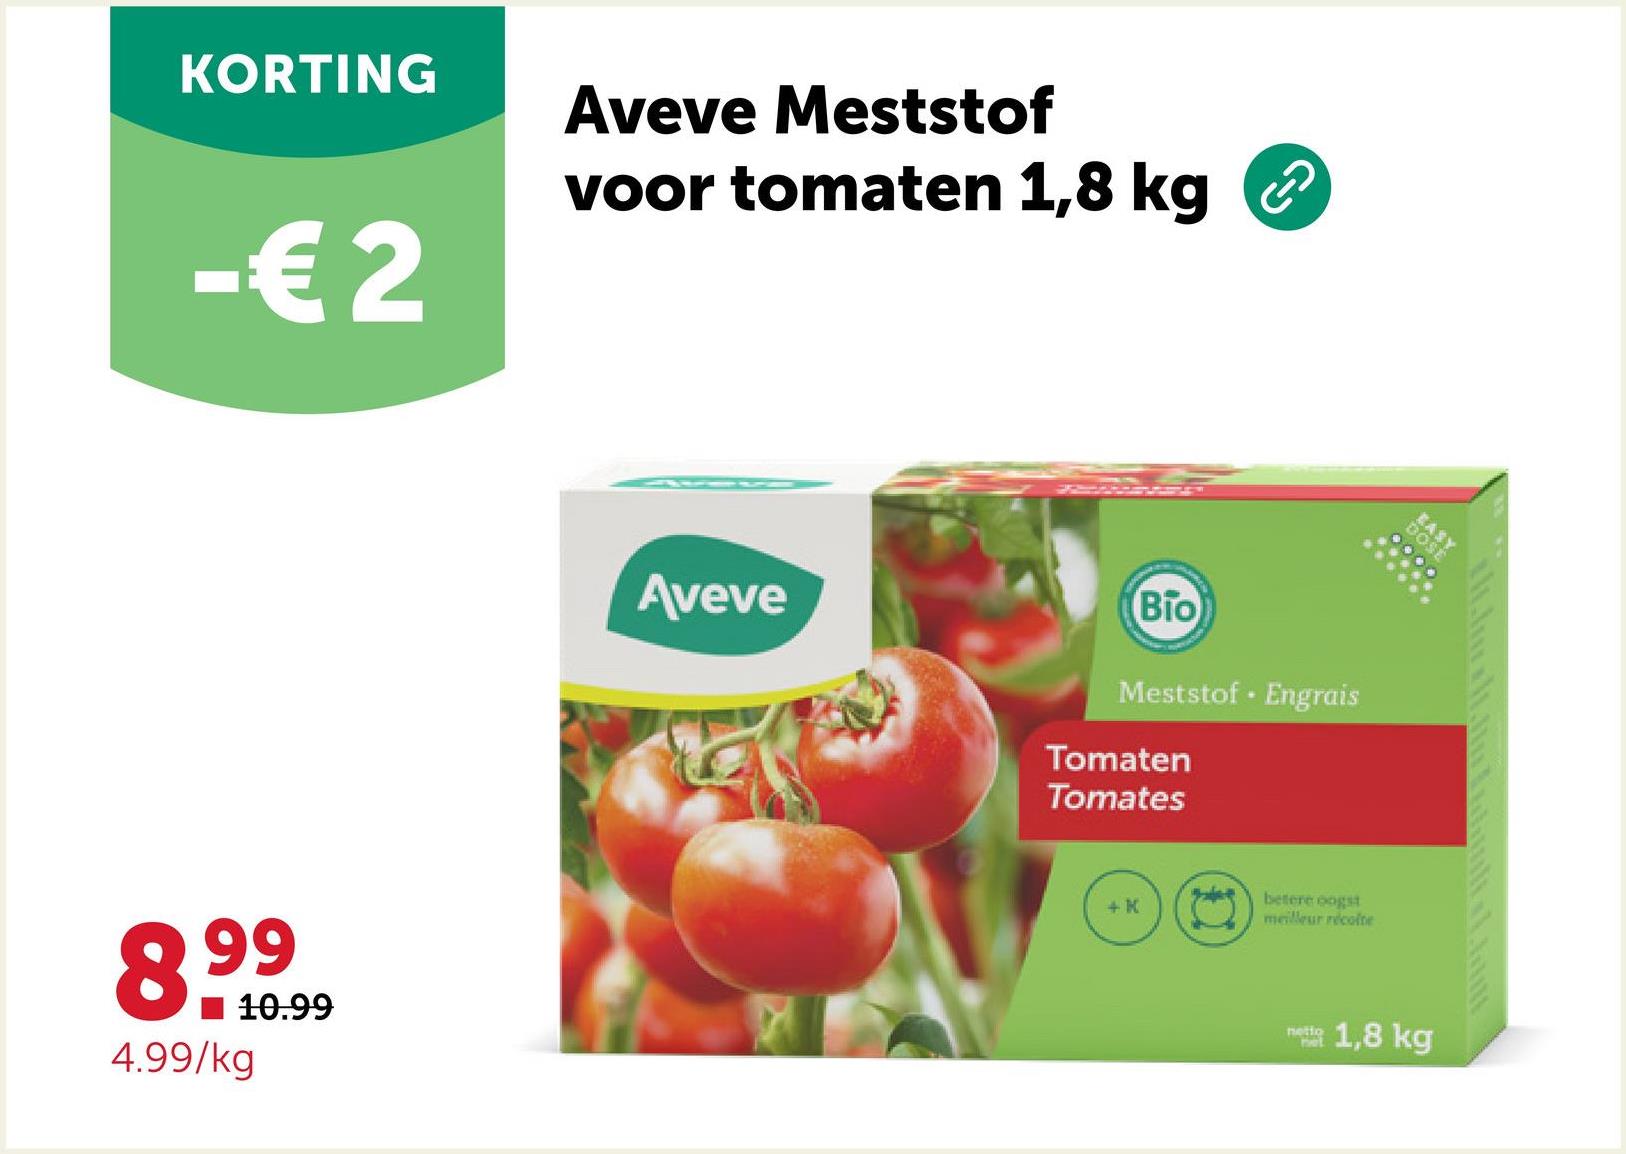 KORTING
-€2
Aveve Meststof
voor tomaten 1,8 kg
8.99
4.99/kg
10.99
دی
Aveve
Bio
Meststof Engrais
Tomaten
Tomates
+ K
betere oogst
meilleur récolte
netio
Pet
EASY
DOSE
1,8 kg